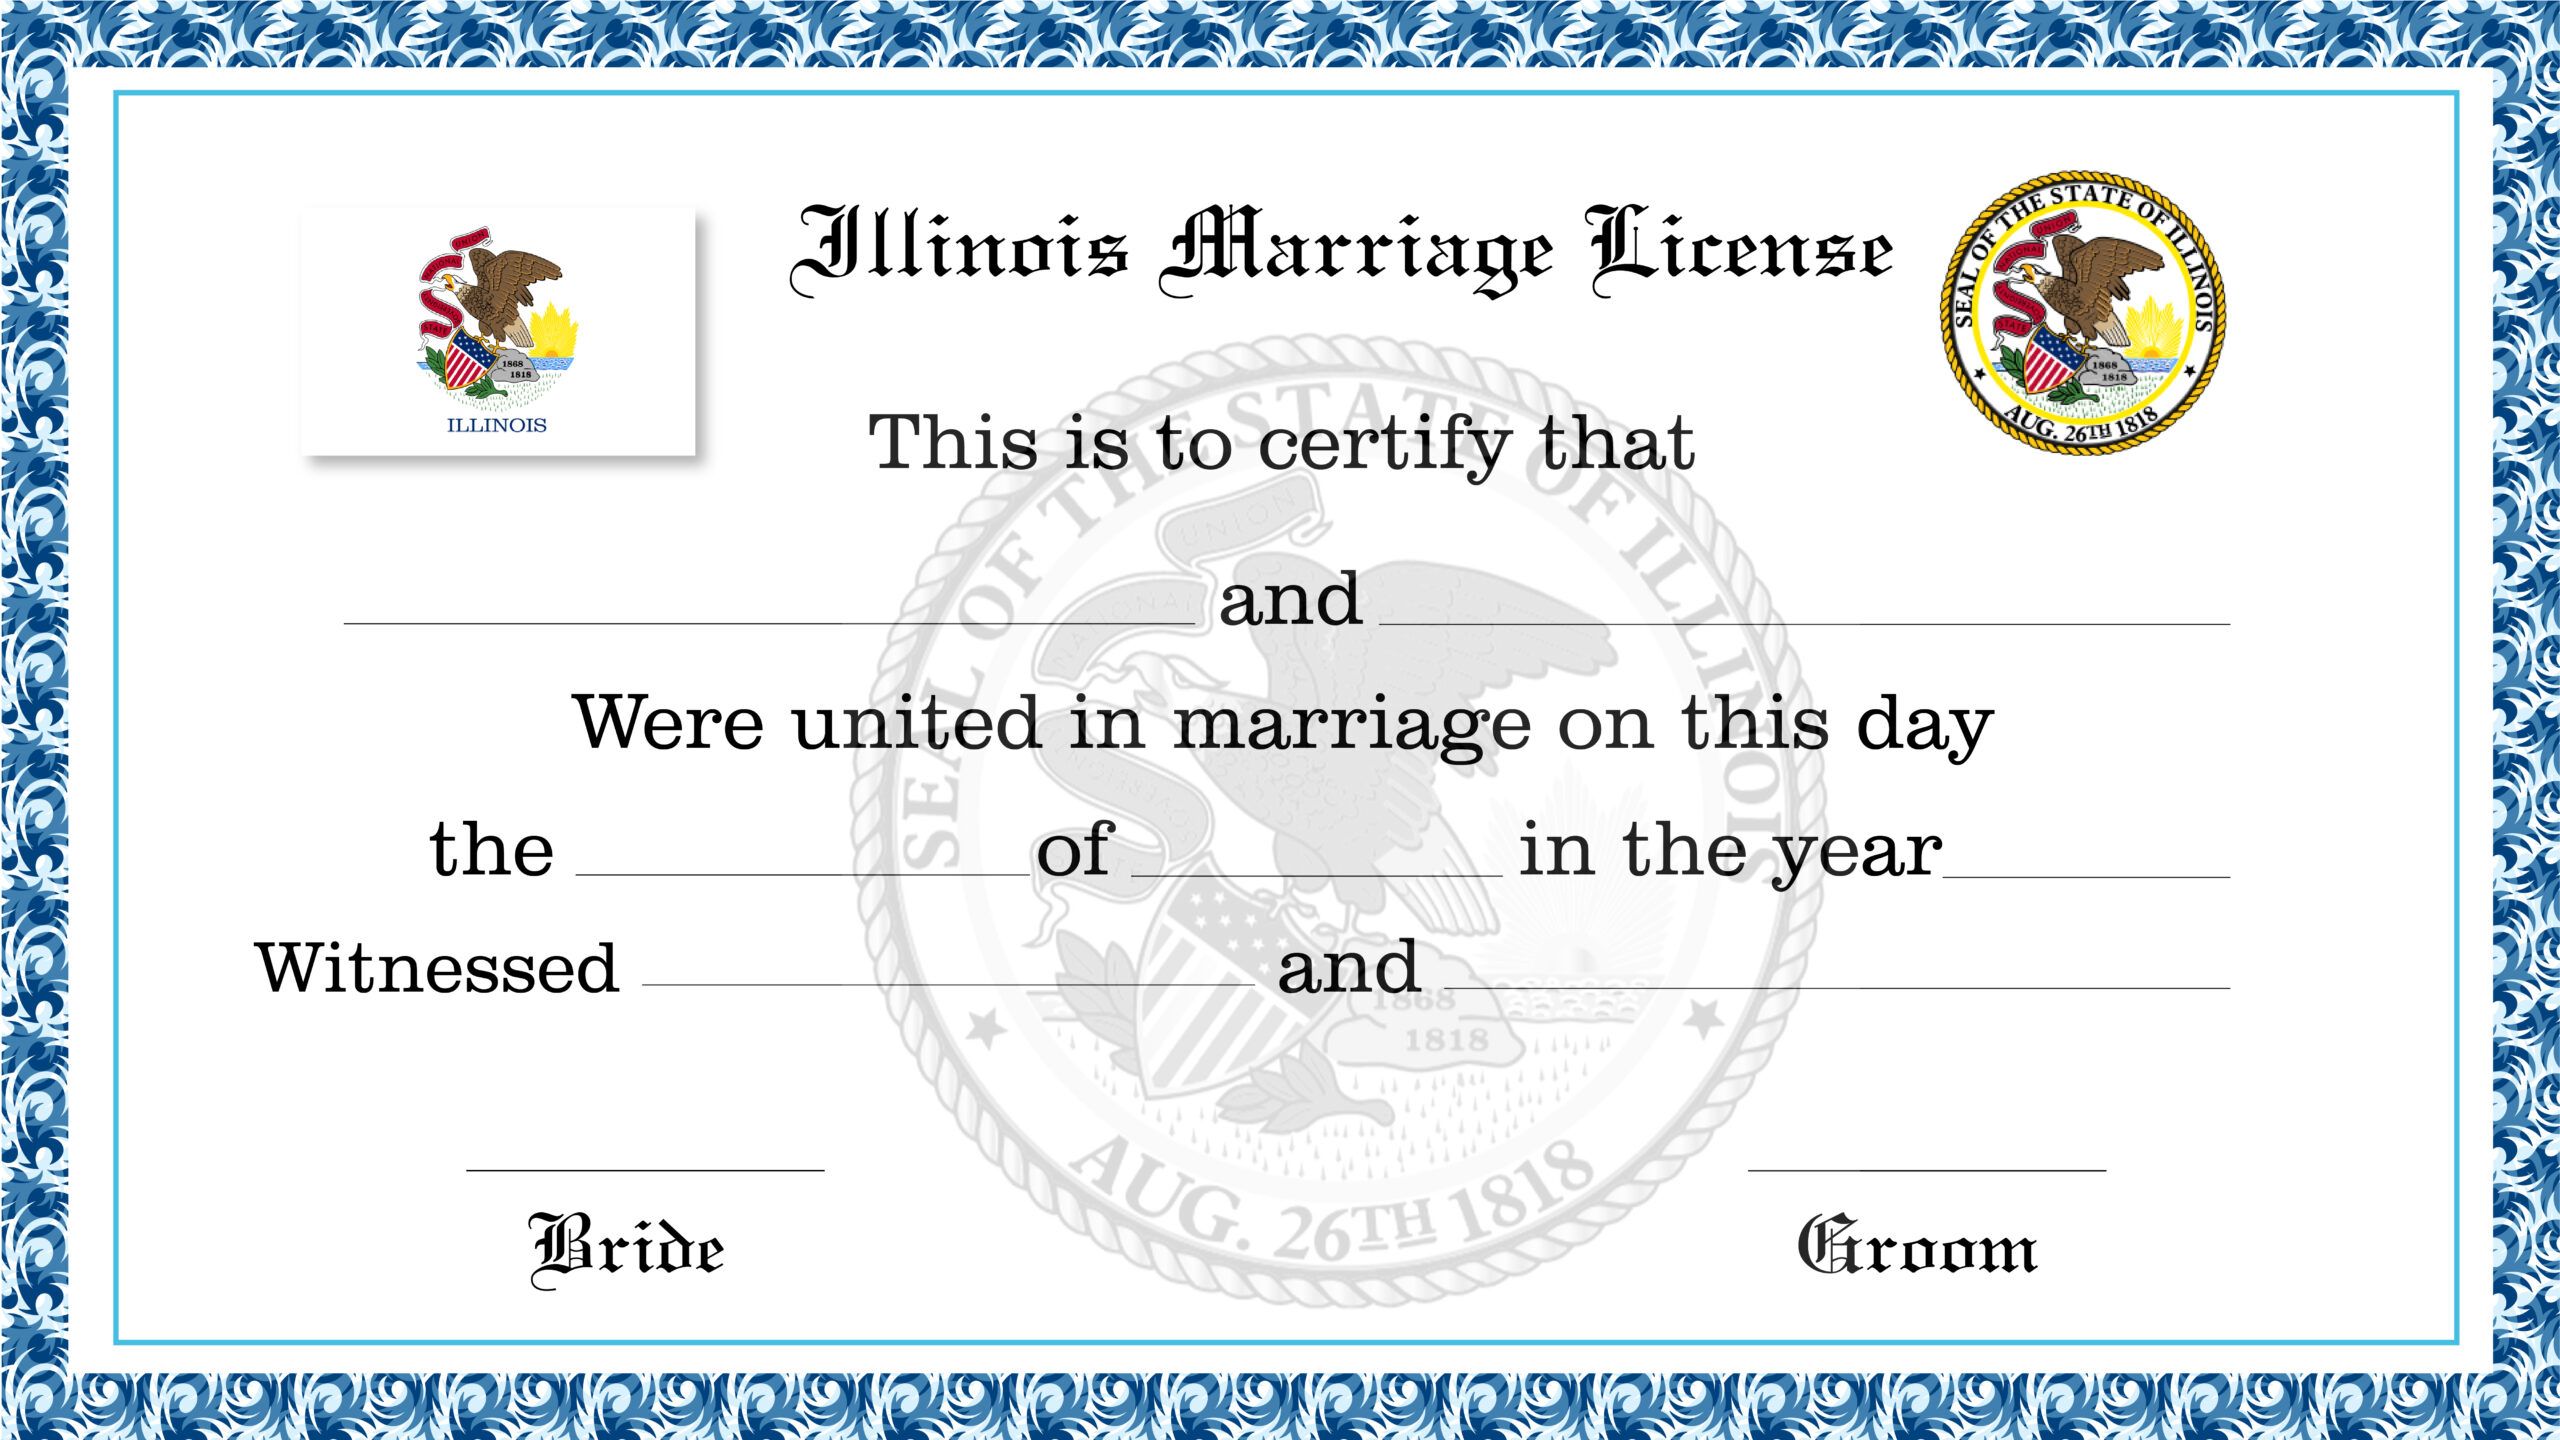 Illinois Marriage License Scaled Fbcac81513 